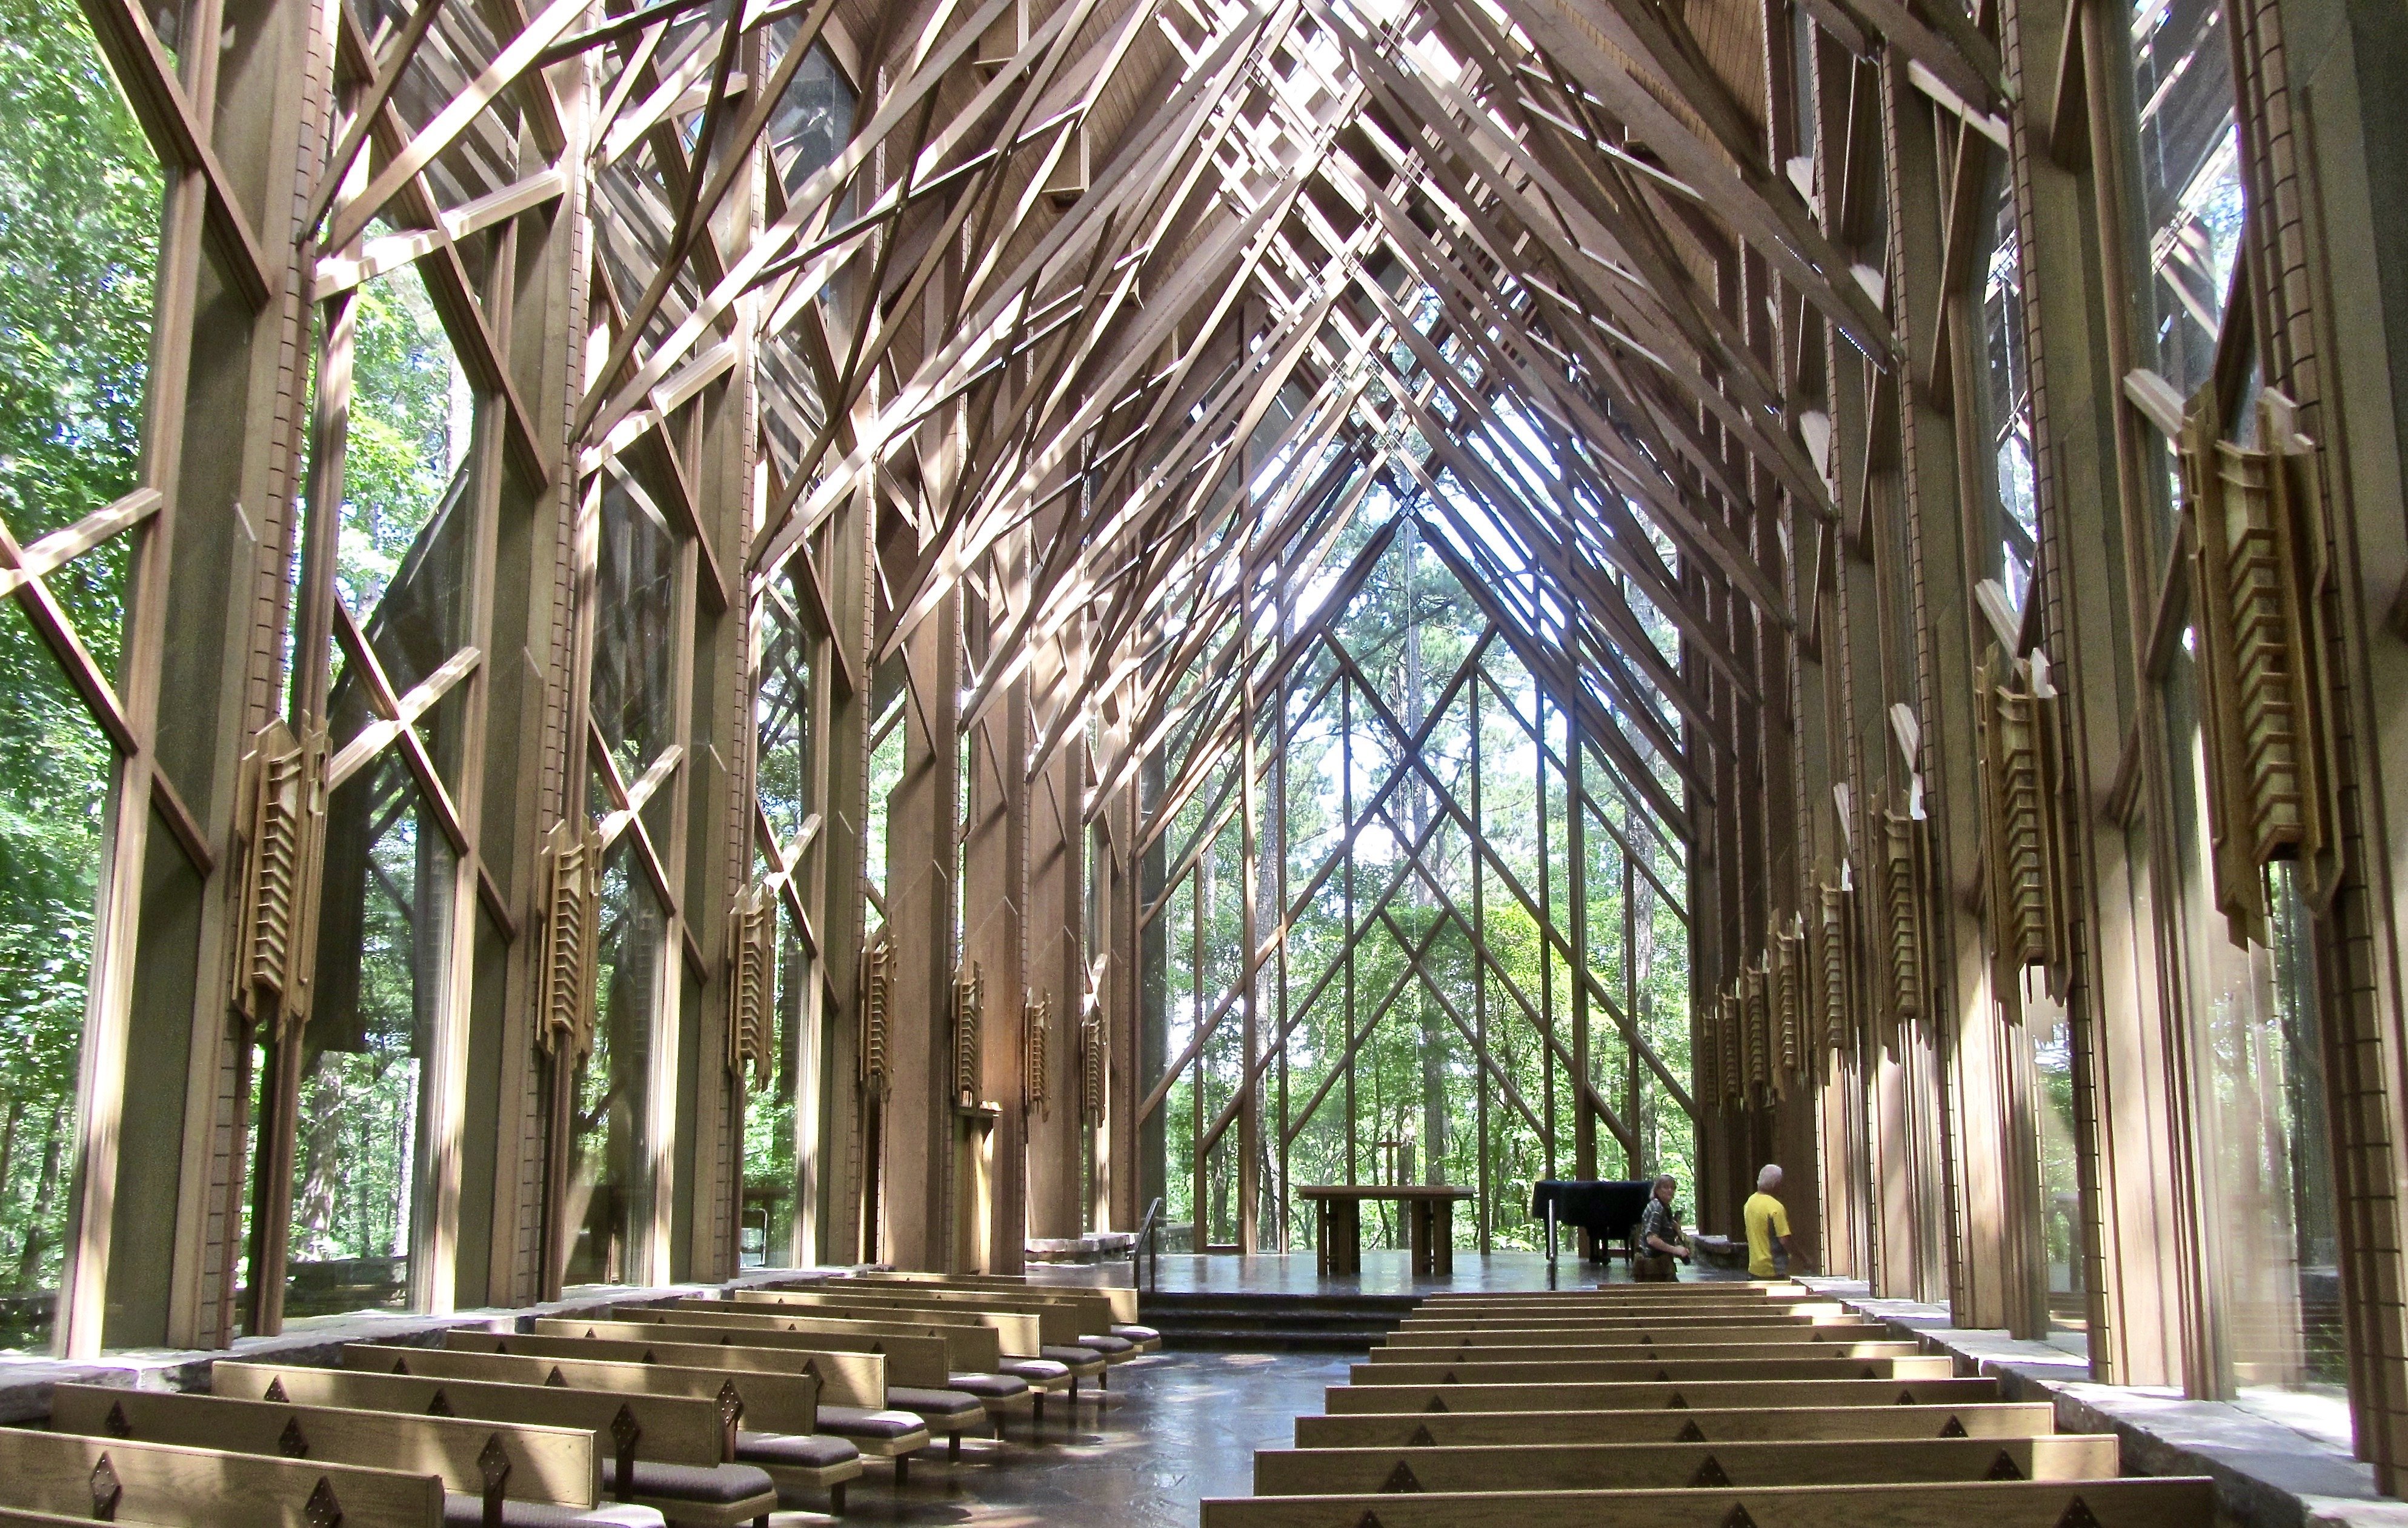 Arkansas Sightseeing Anthony Chapel At Garvan Gardens Worth The Visit